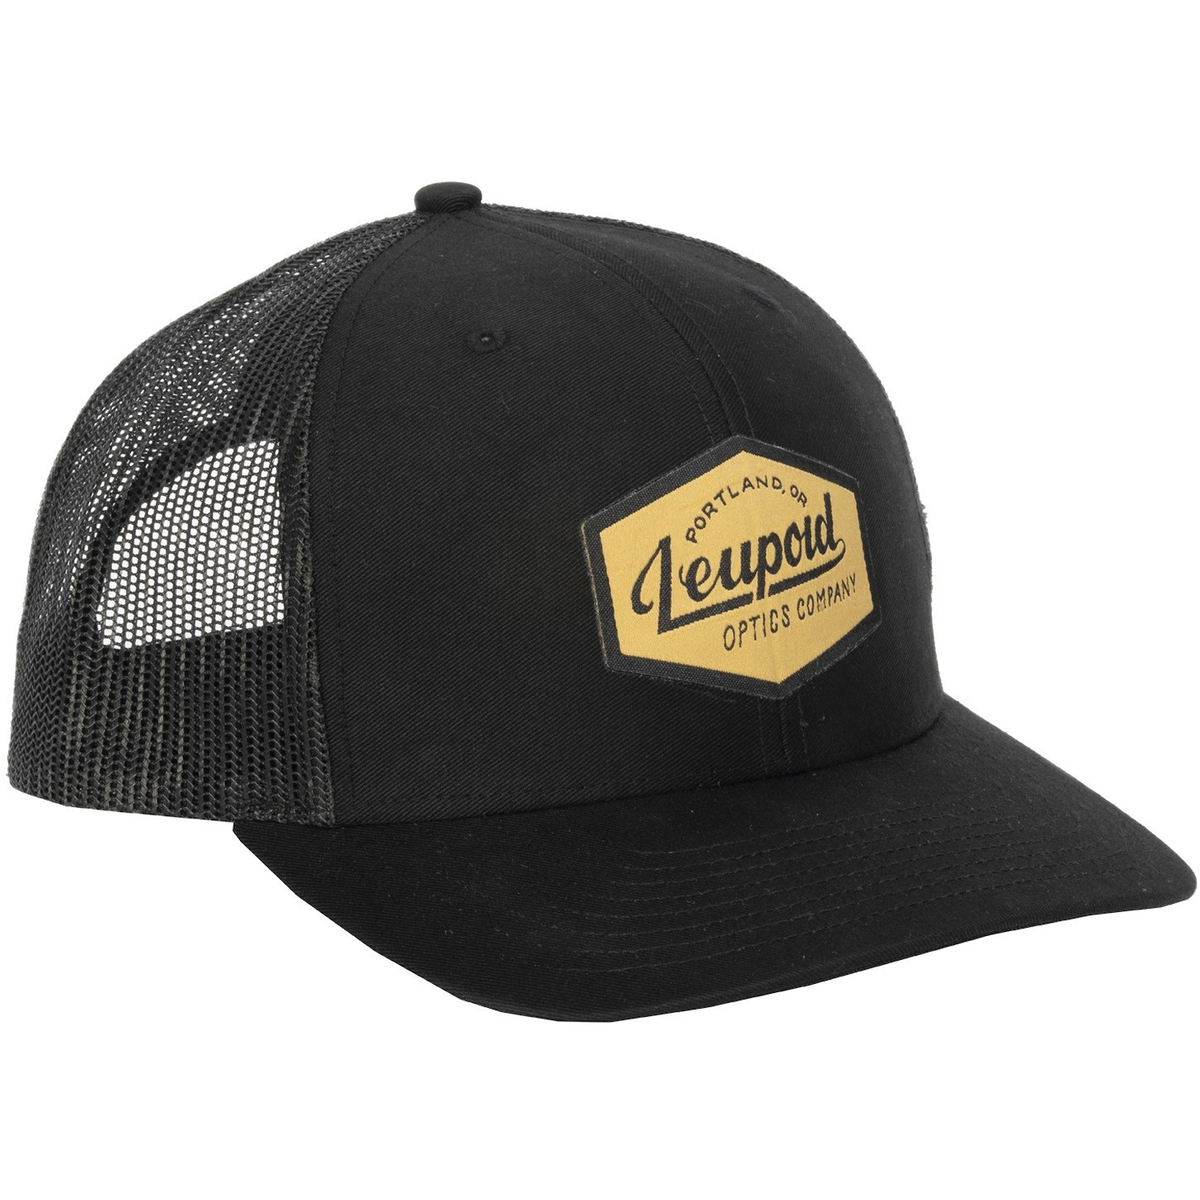 Leupold Gold Label Trucker Hat - Black - Black One Size Fits Most ...